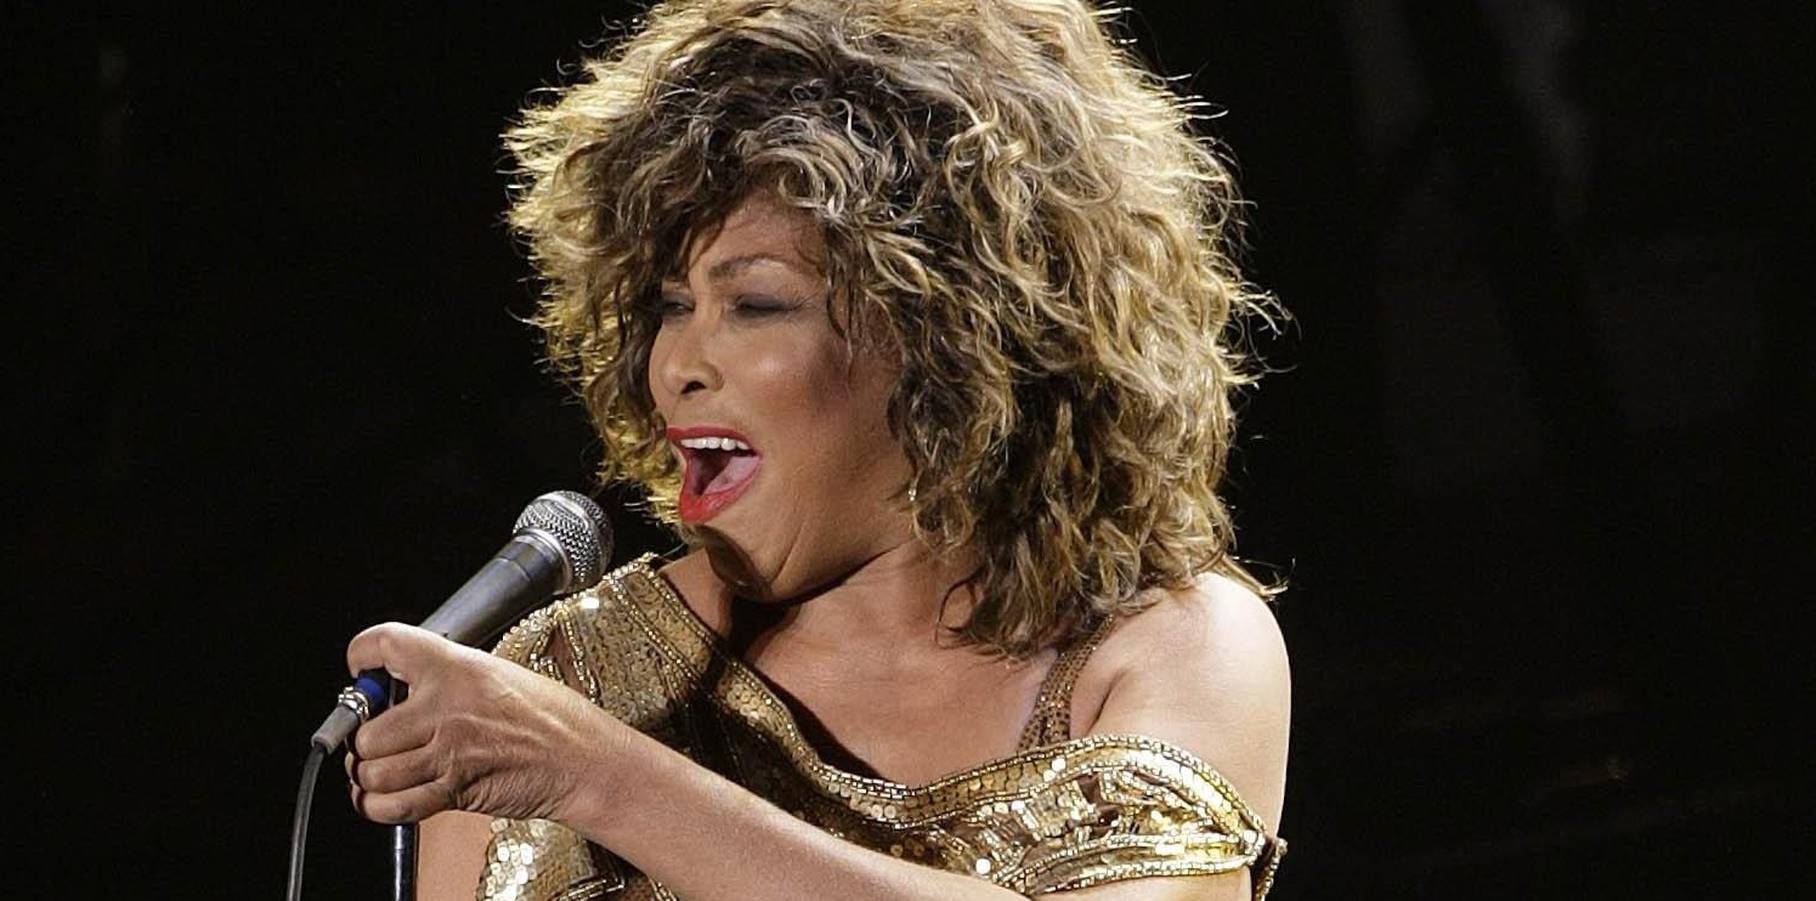 Tina Turner in concert - Dublin